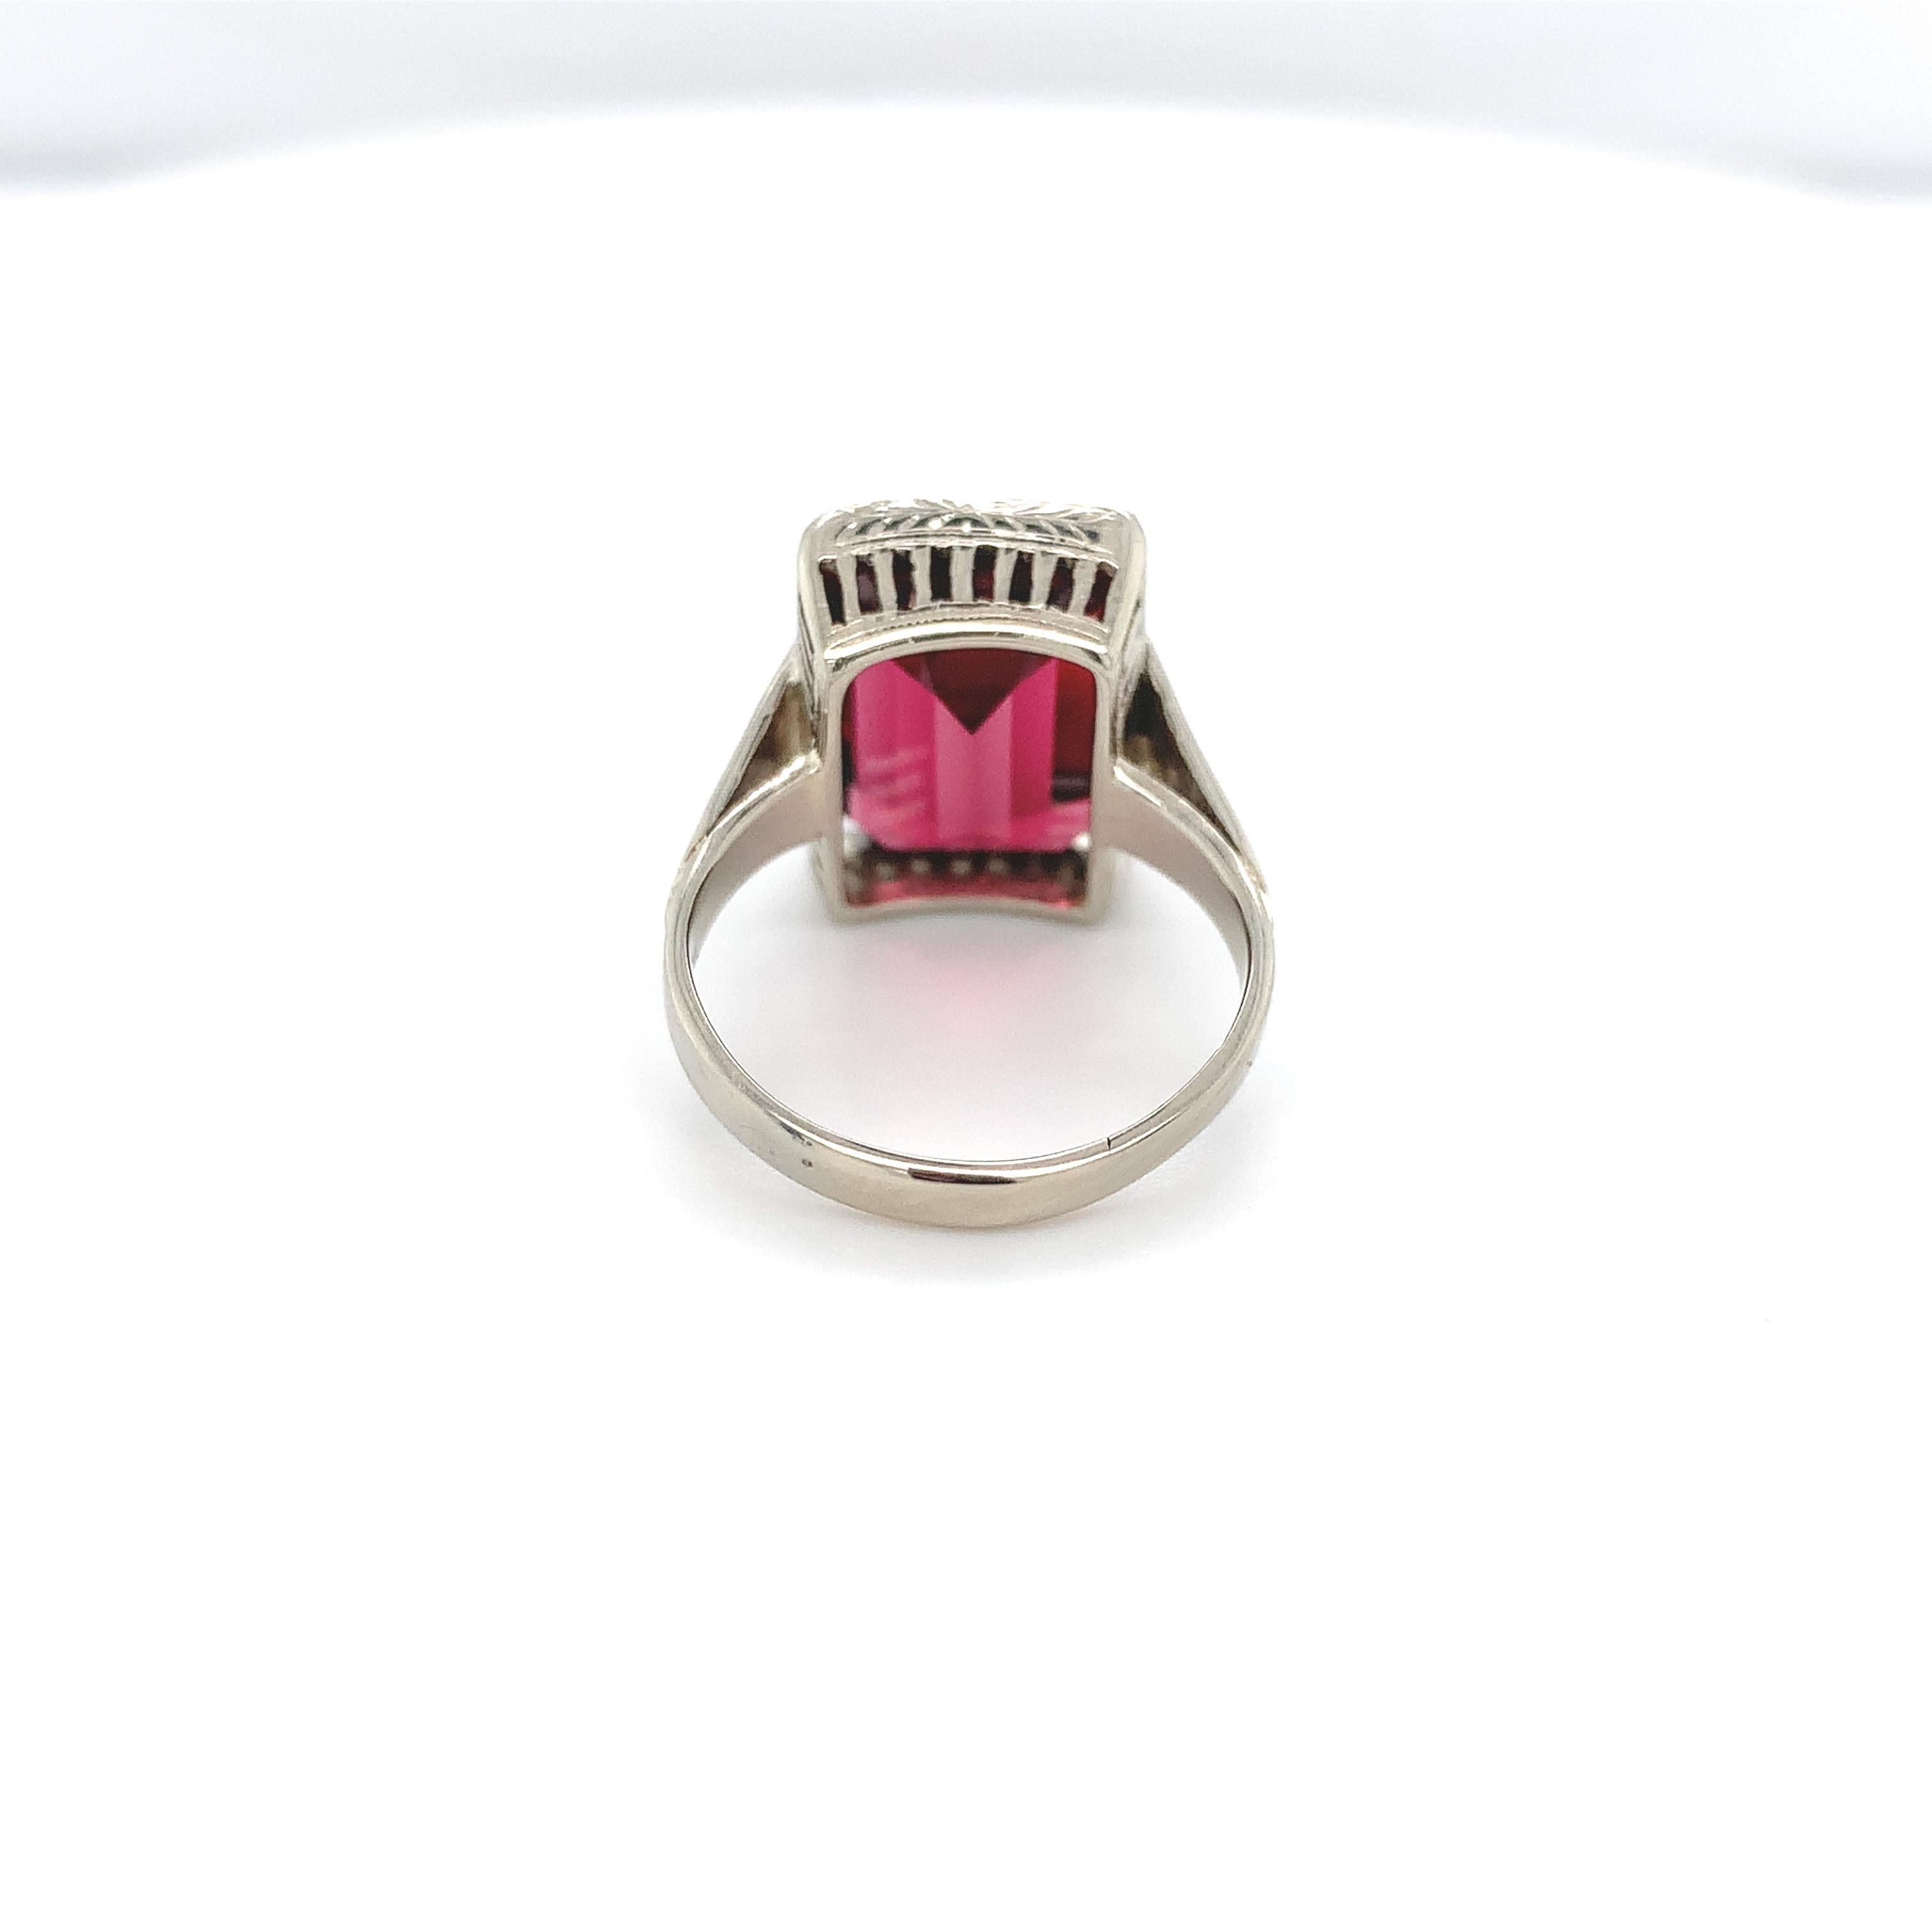 Women's 14K White Gold Hand Engraved Ring with an 8.35 carat Rhodolite Garnet For Sale